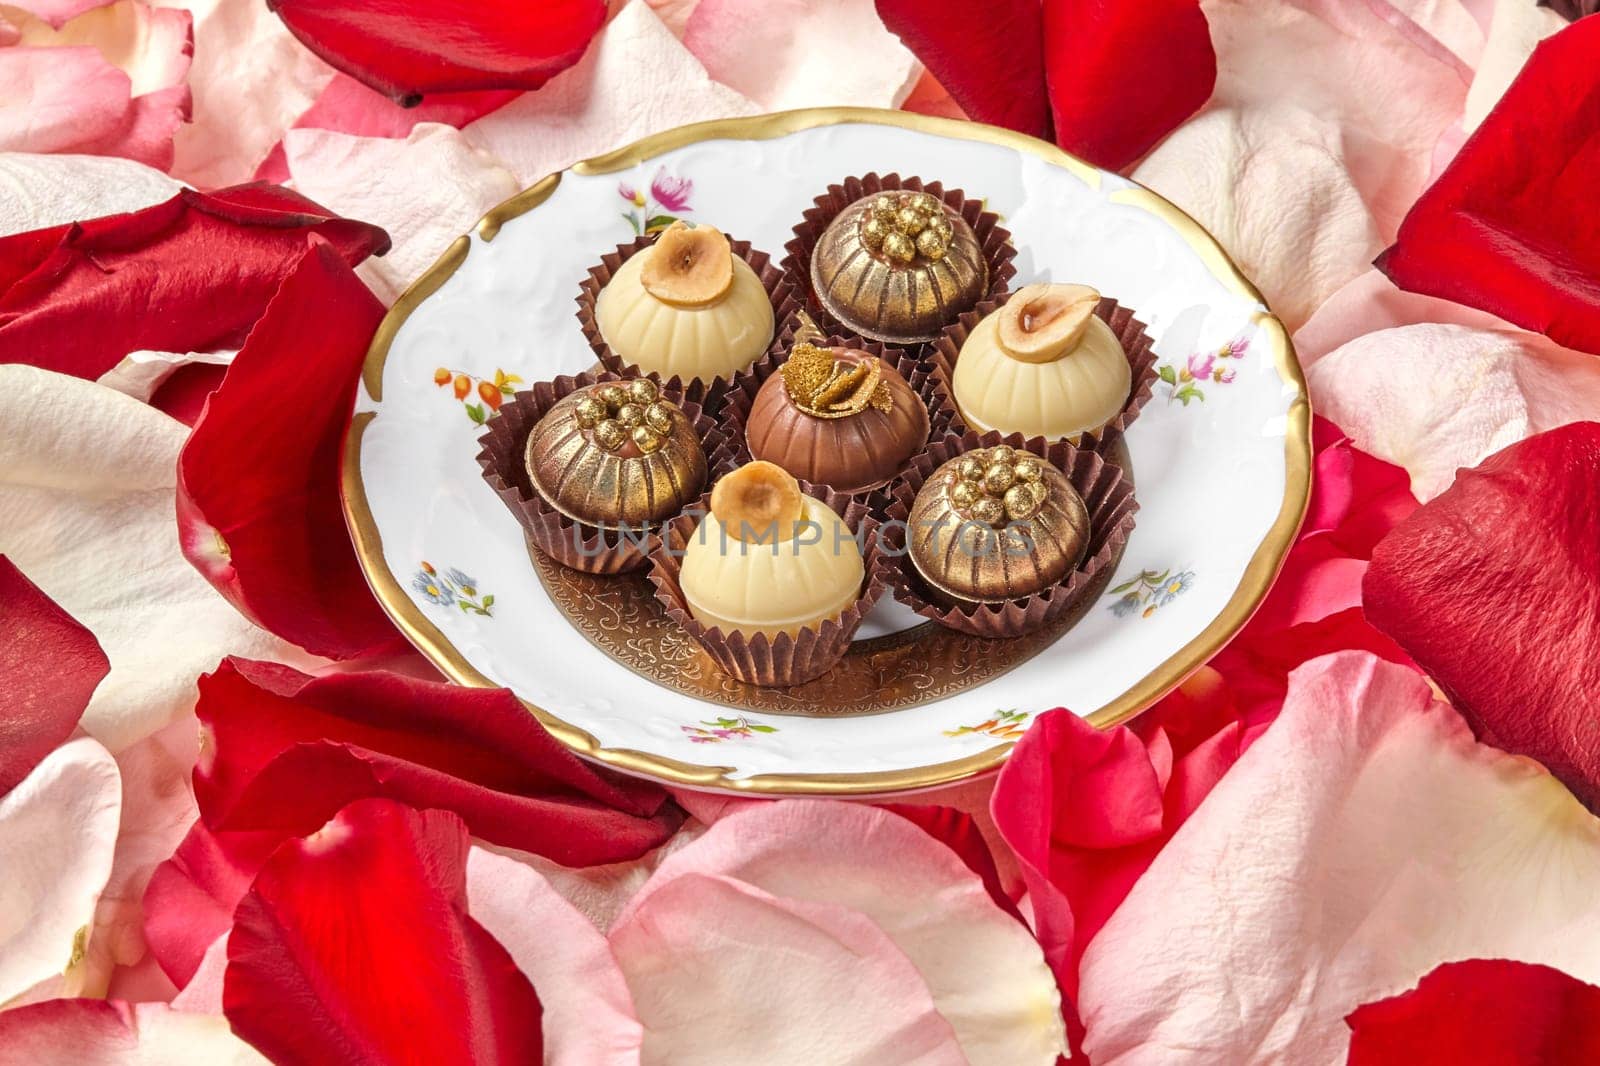 Handmade chocolate candies on vintage plate amidst rose petals by nazarovsergey